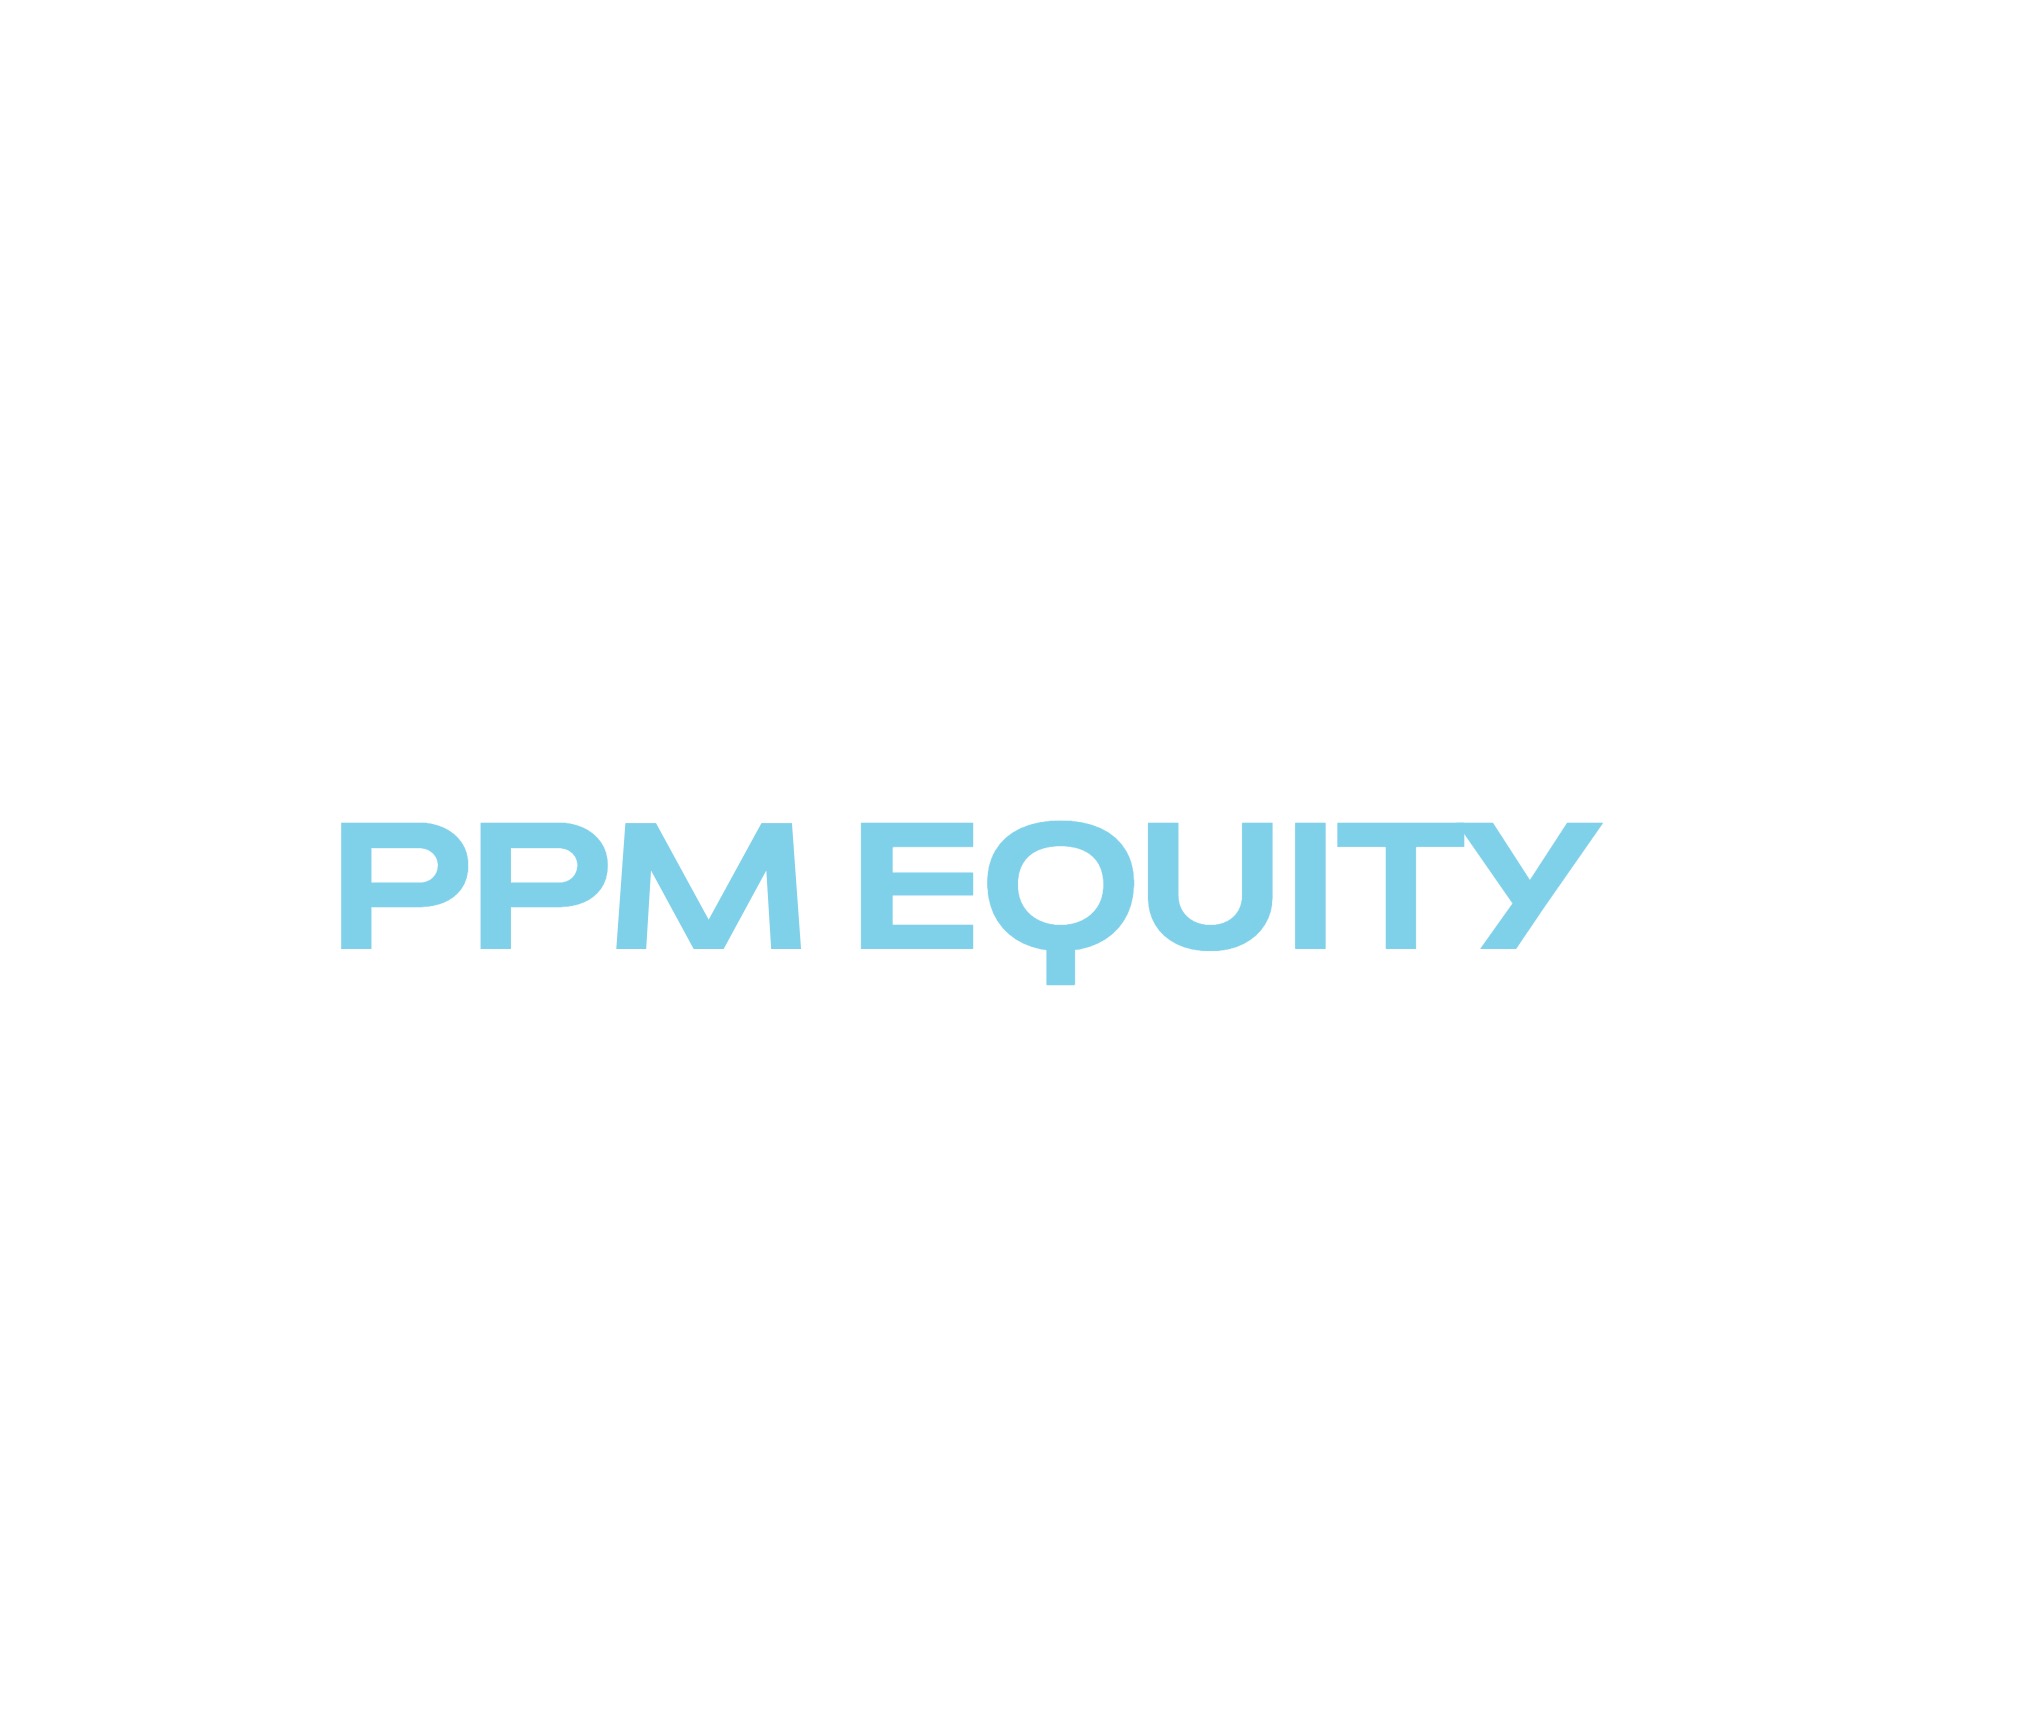 PPM Equity